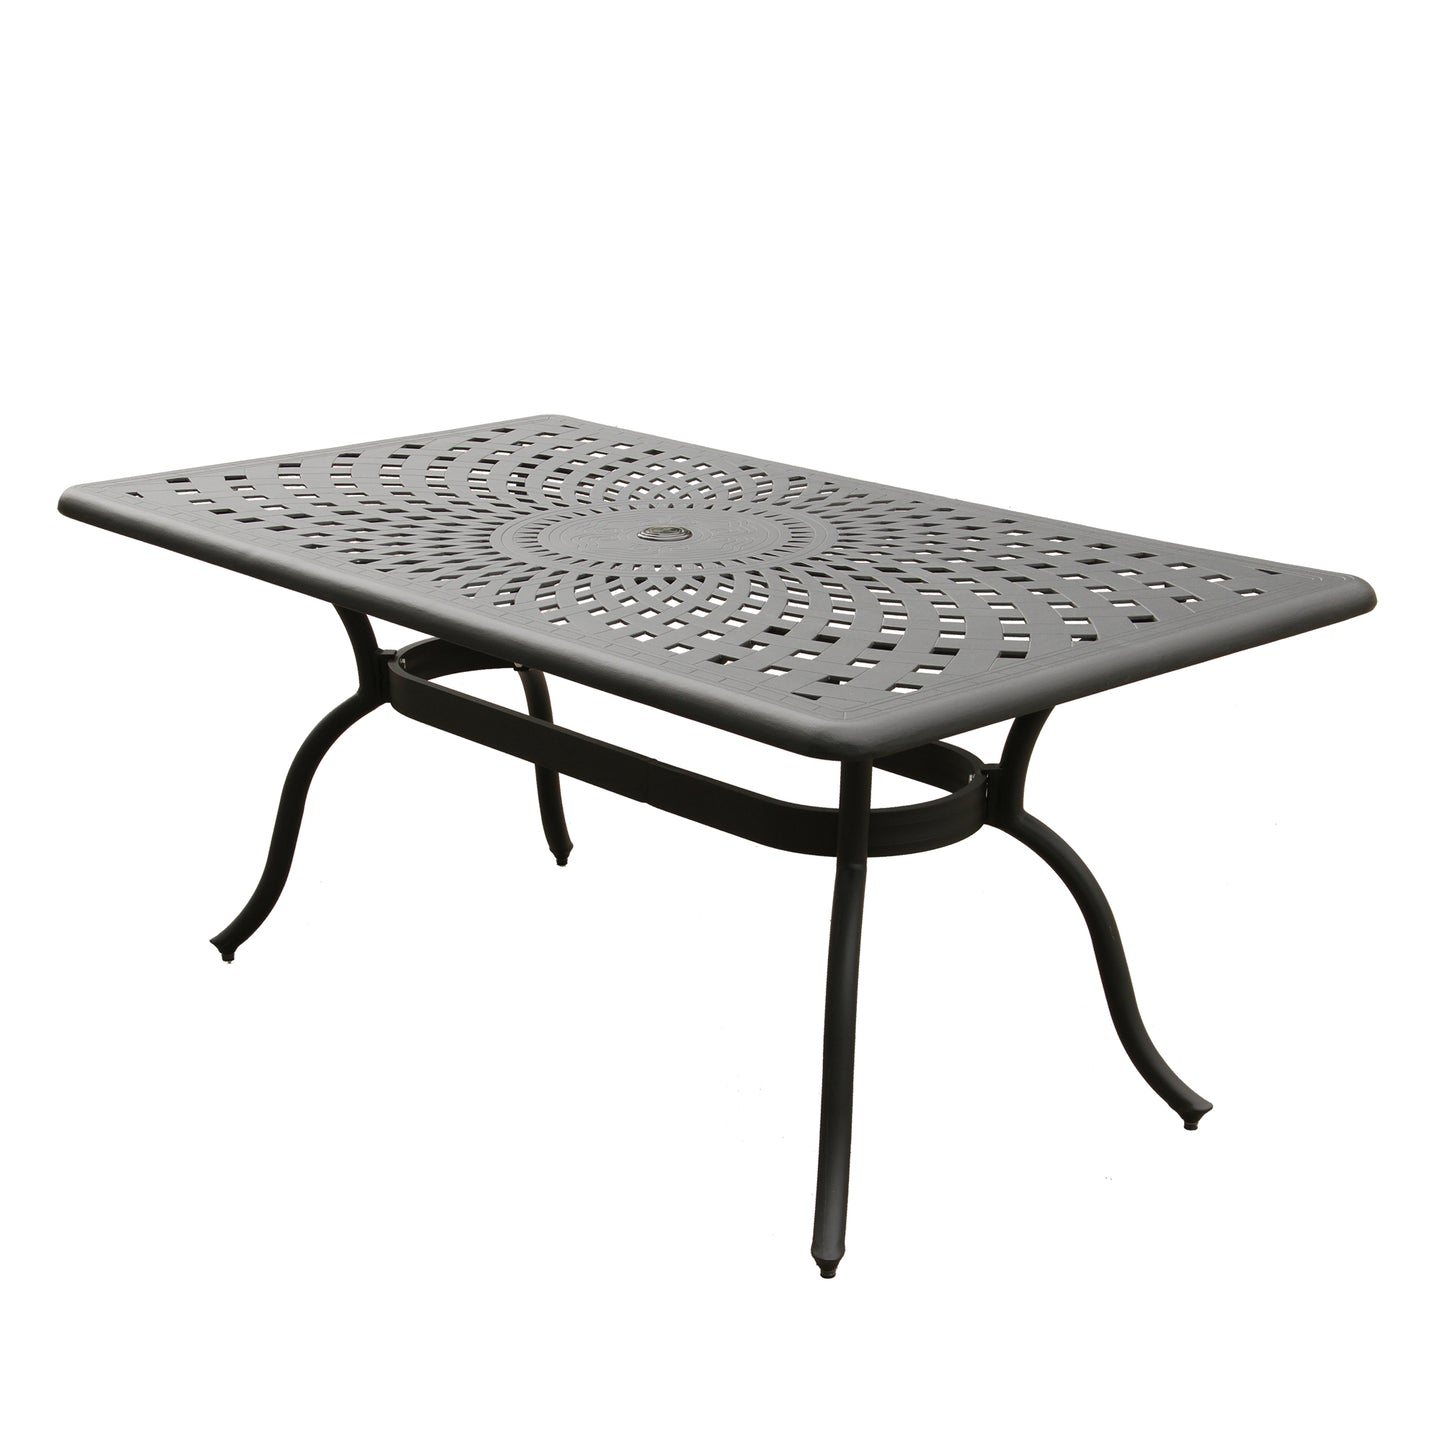 Outdoor Aluminum 7pc Black Rectangular Patio Dining Set and Six Chairs